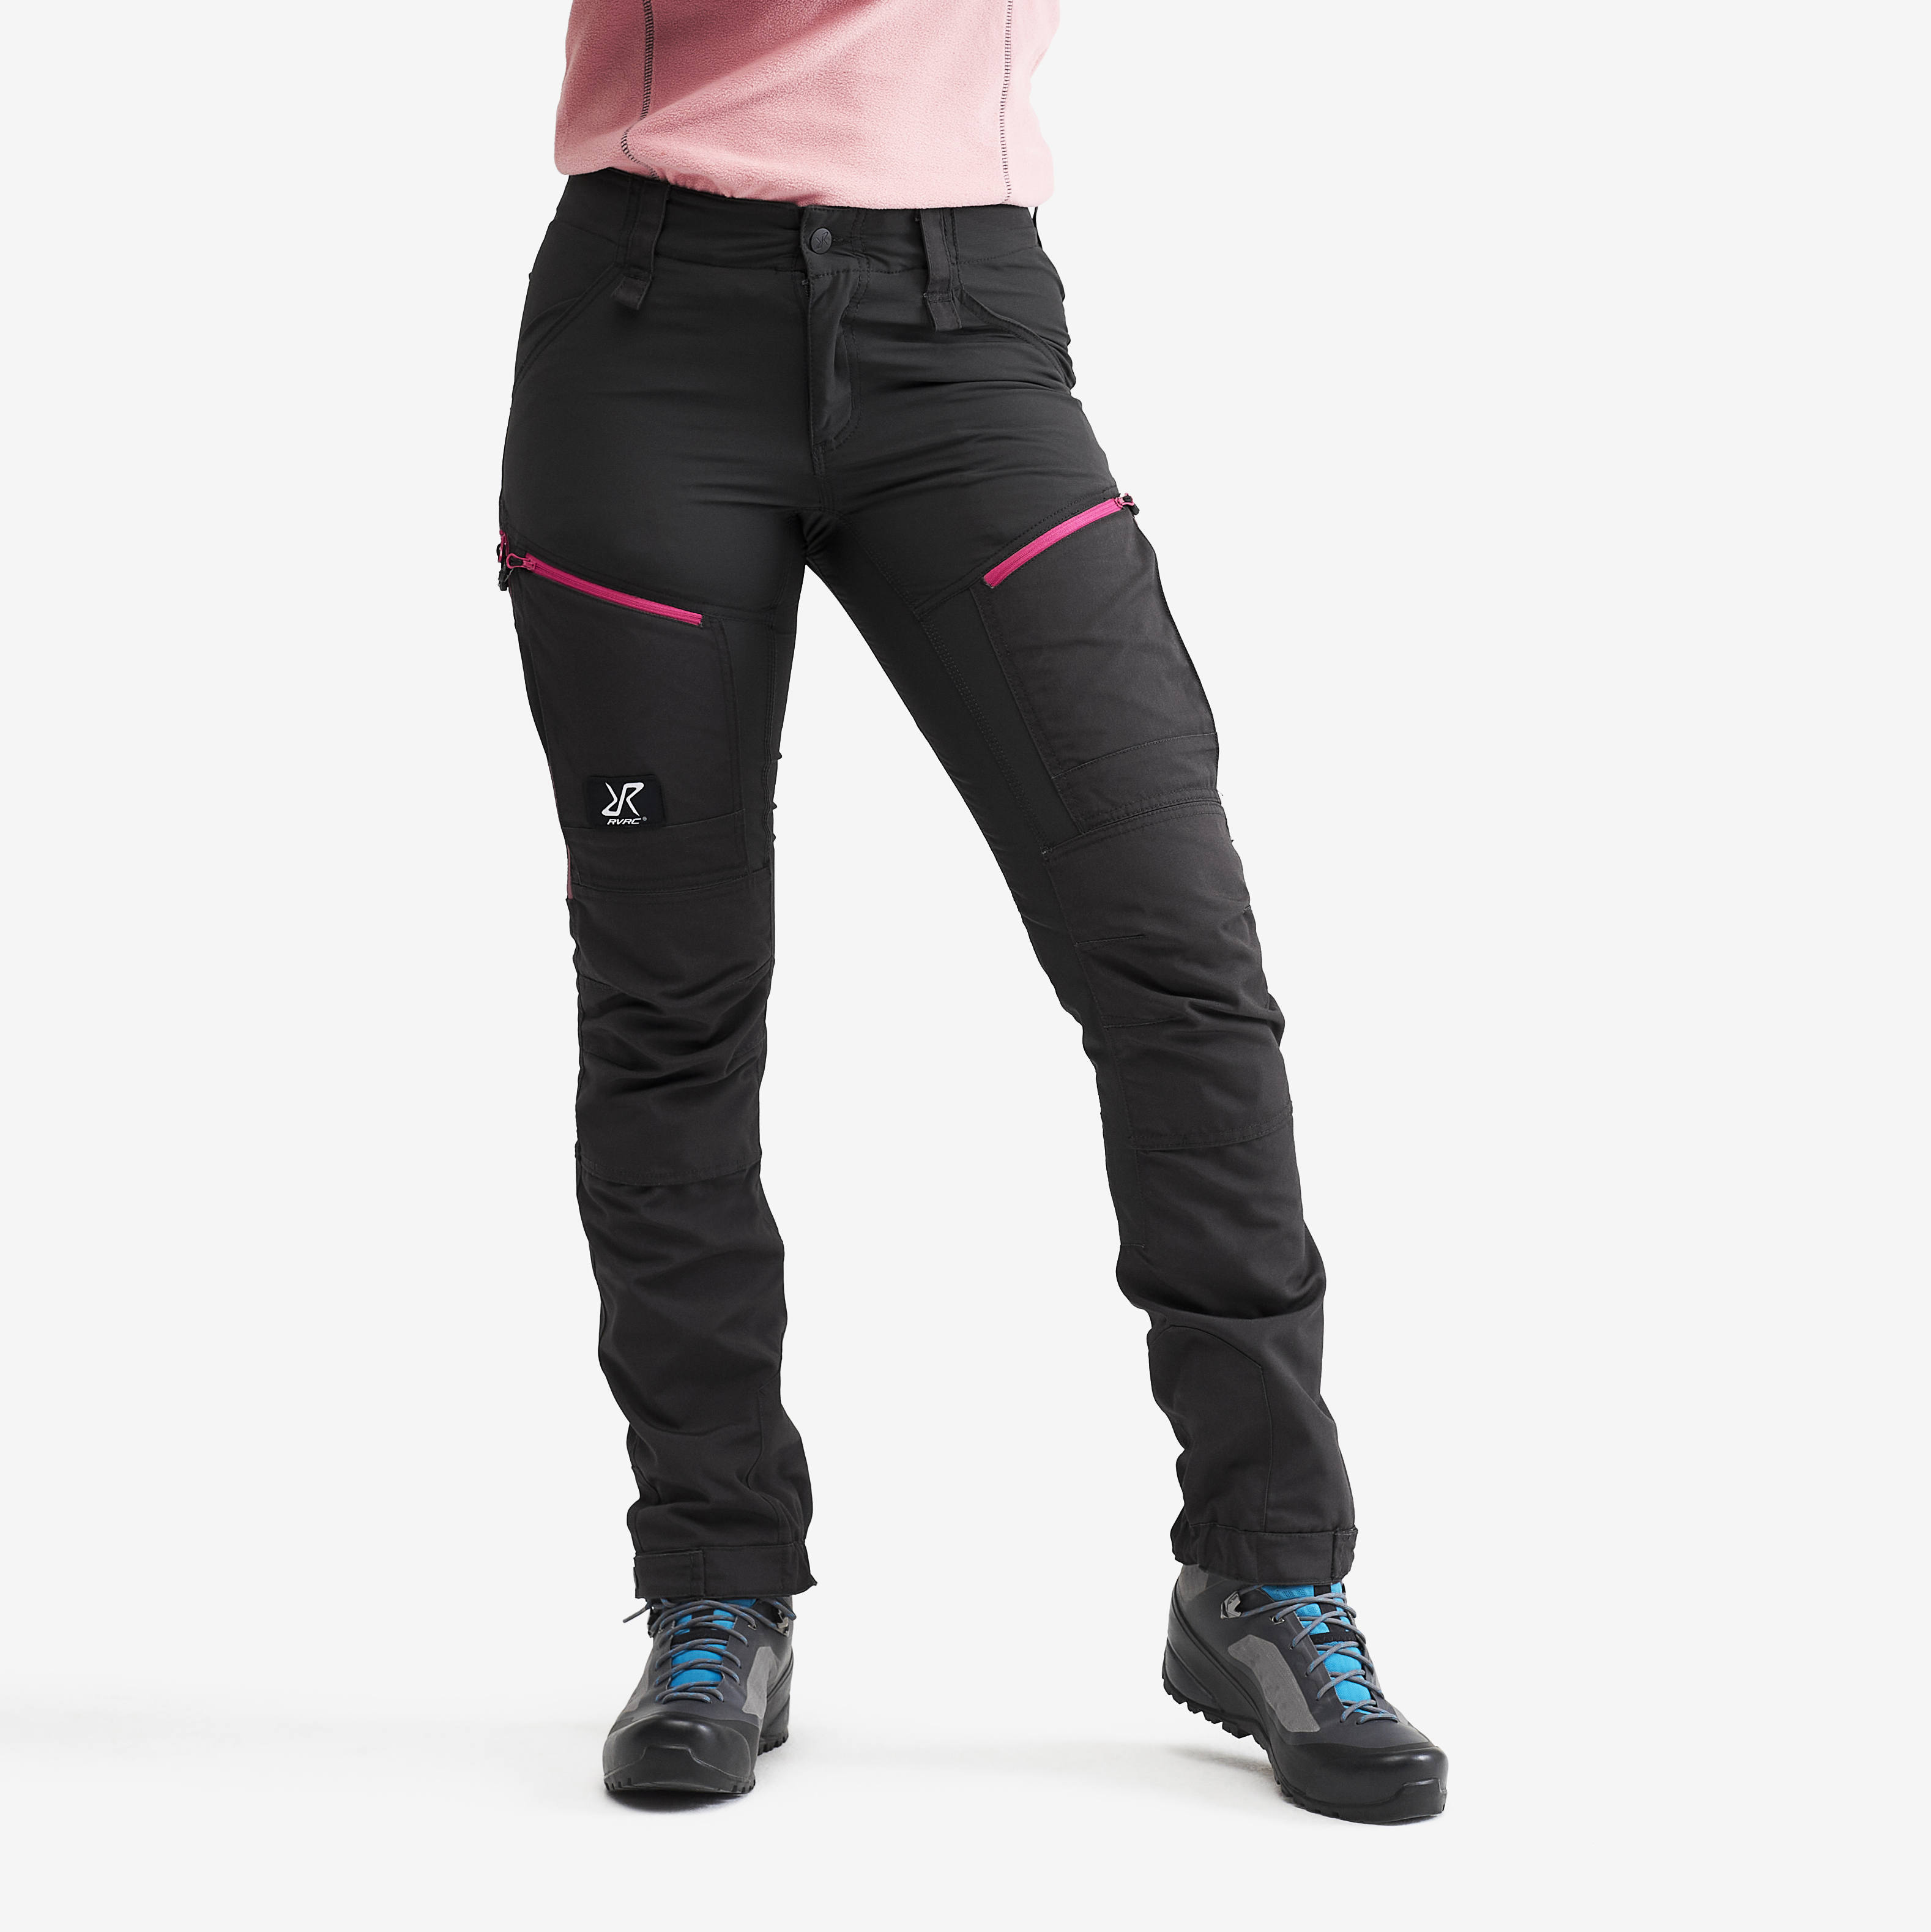 RVRC GP Pro Pants Grey/Pink Women